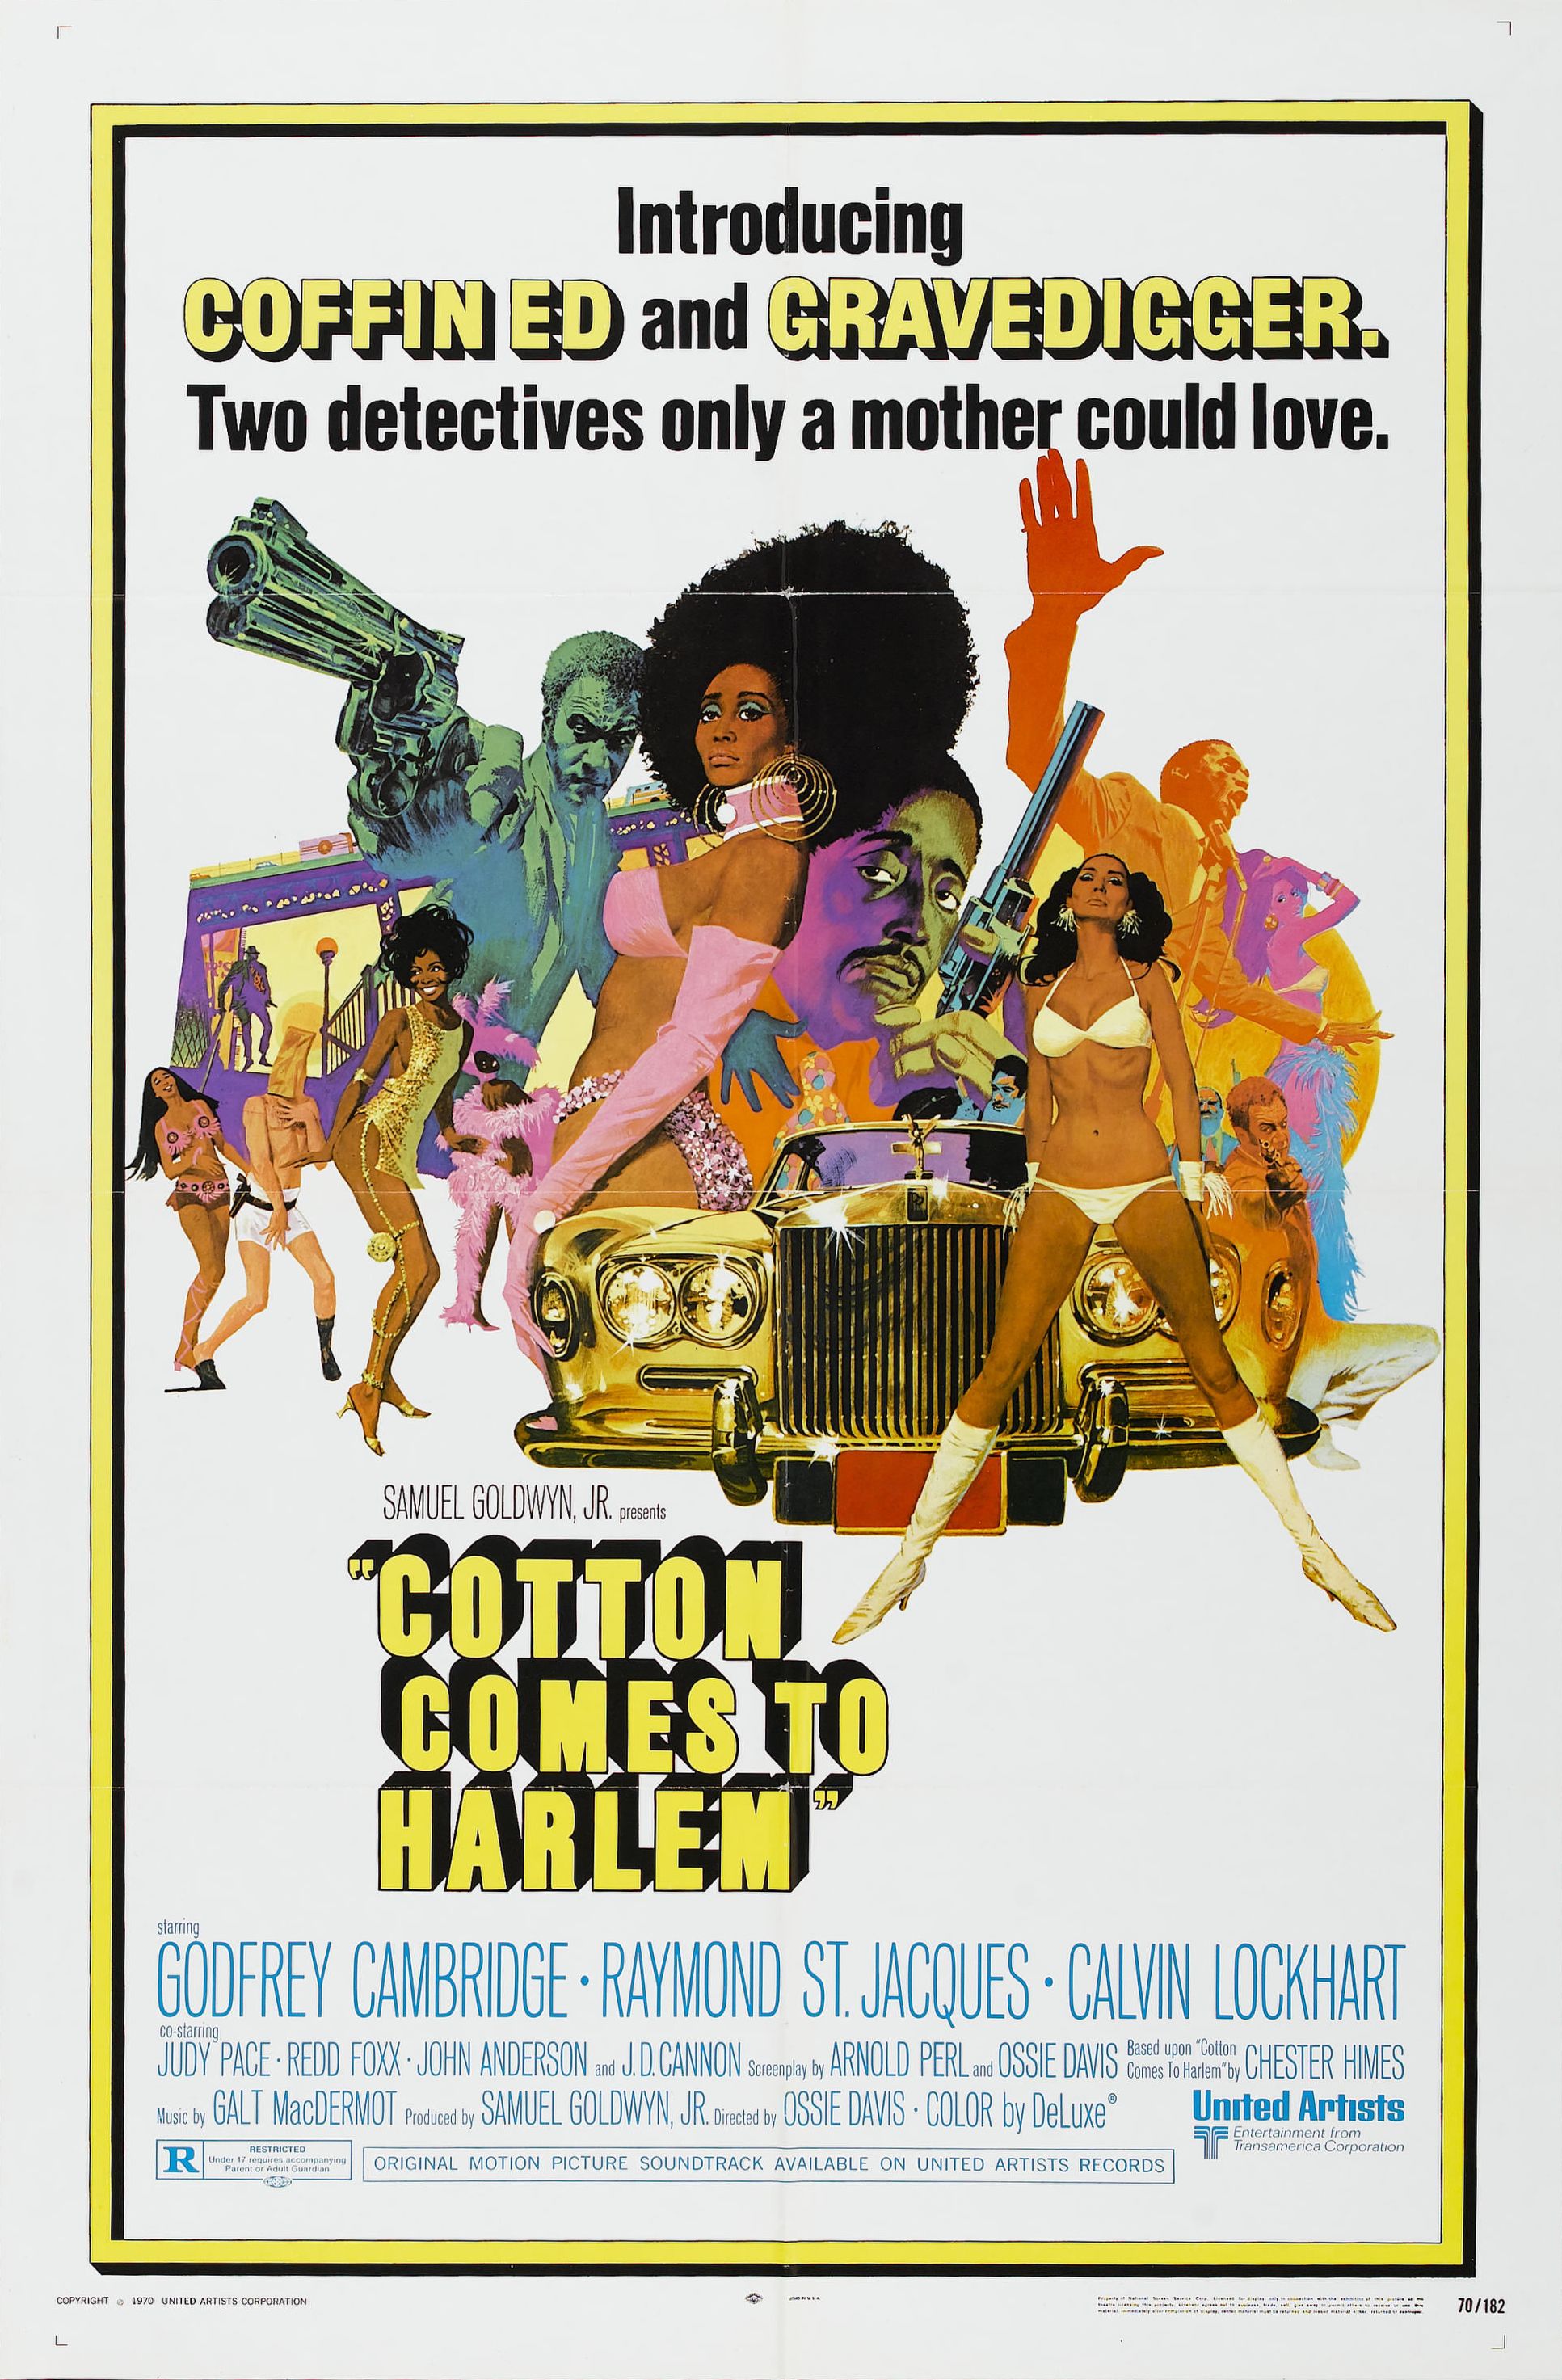 Nonton film Cotton Comes to Harlem layarkaca21 indoxx1 ganool online streaming terbaru